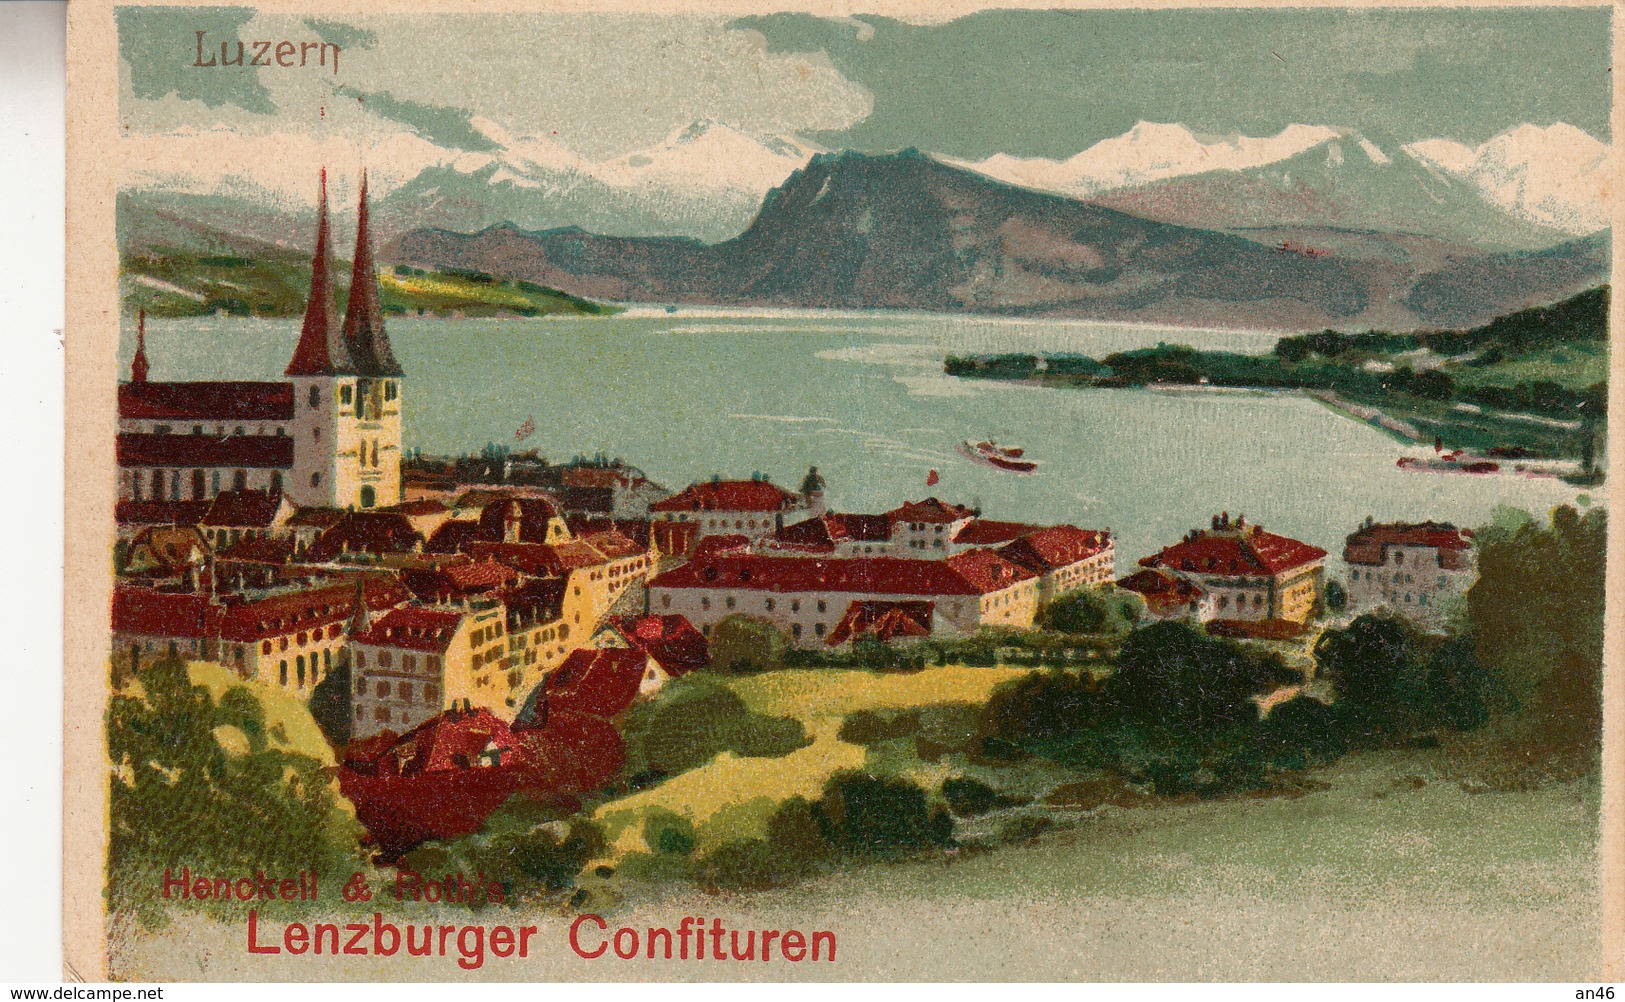 LENZBURGER CONFITUREN LUZERN -ADVERTISING-AUTENTICA 100% - Lenzburg